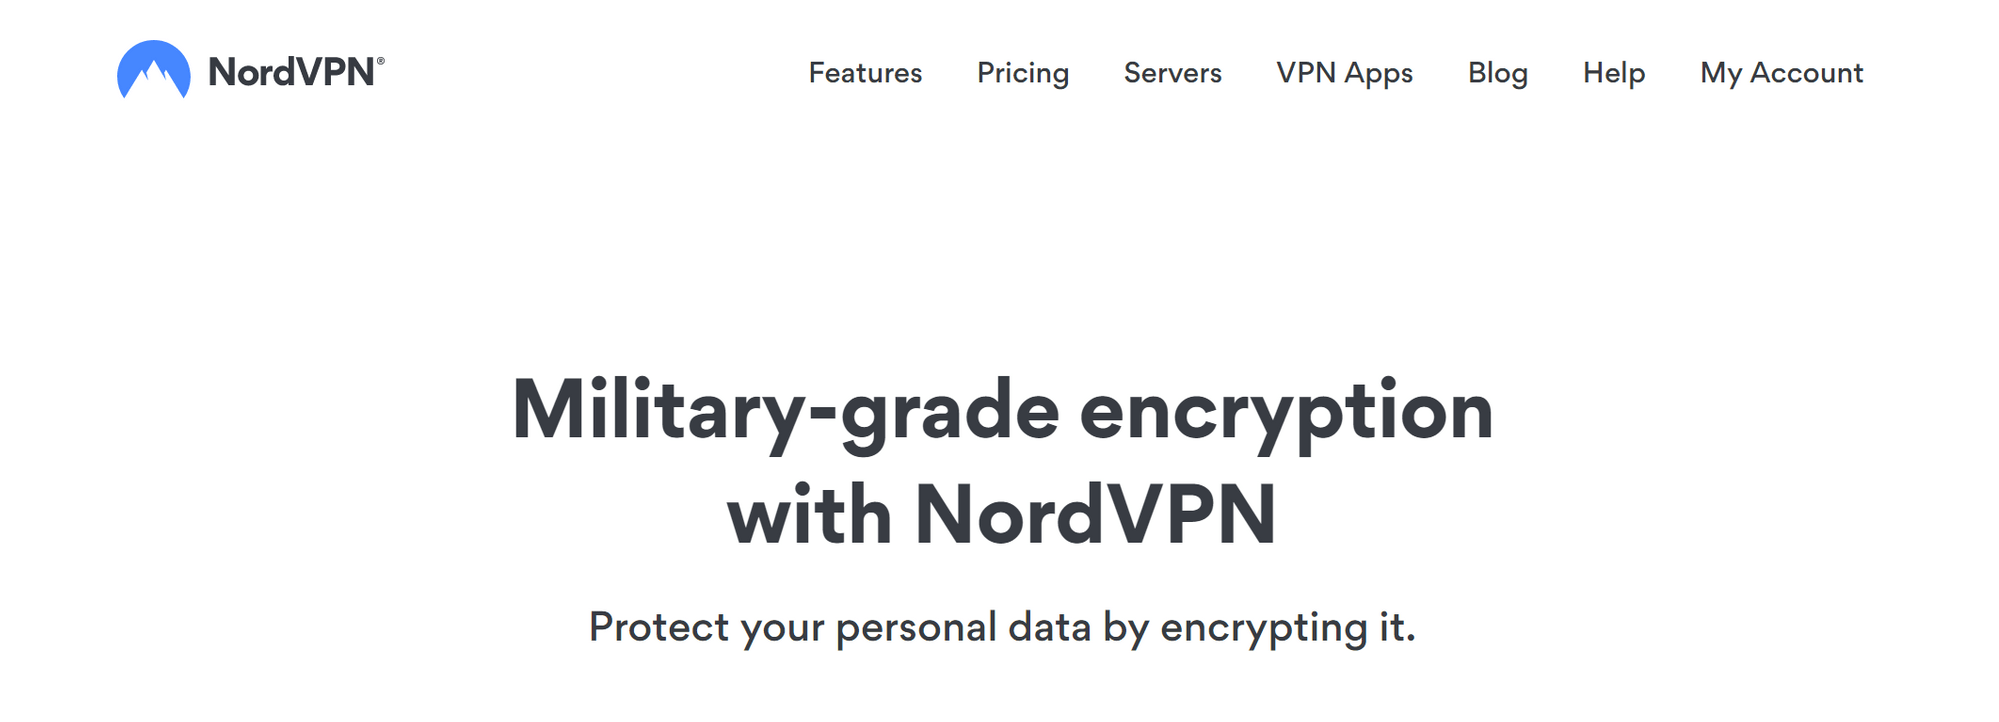 How a good VPN uses encryption